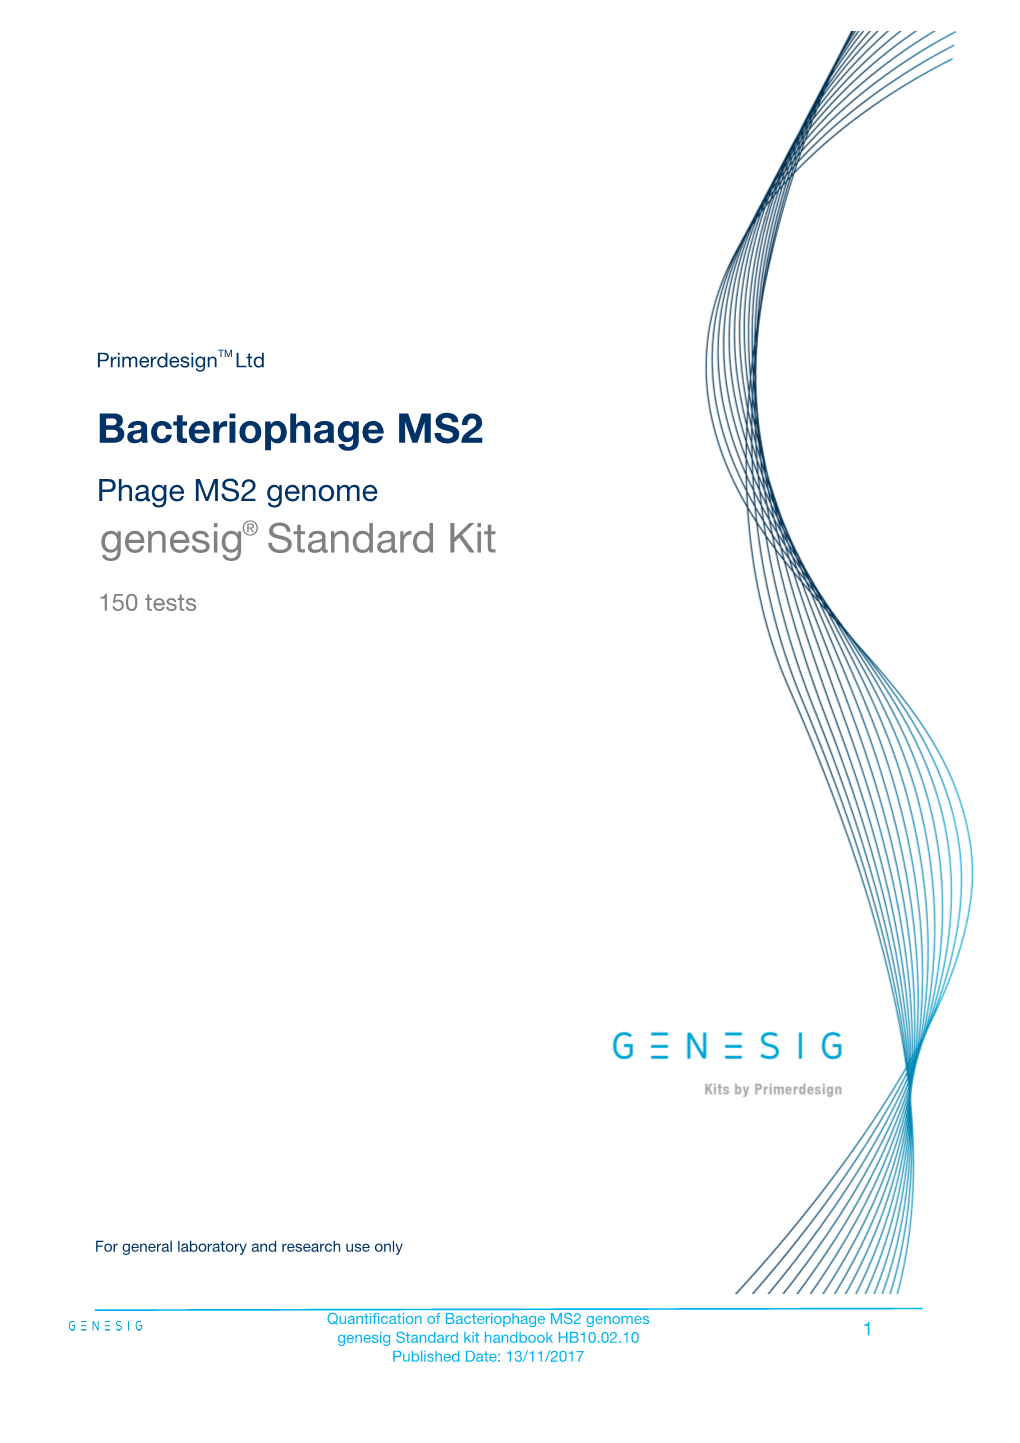 Bacteriophage MS2 Genesig Standard